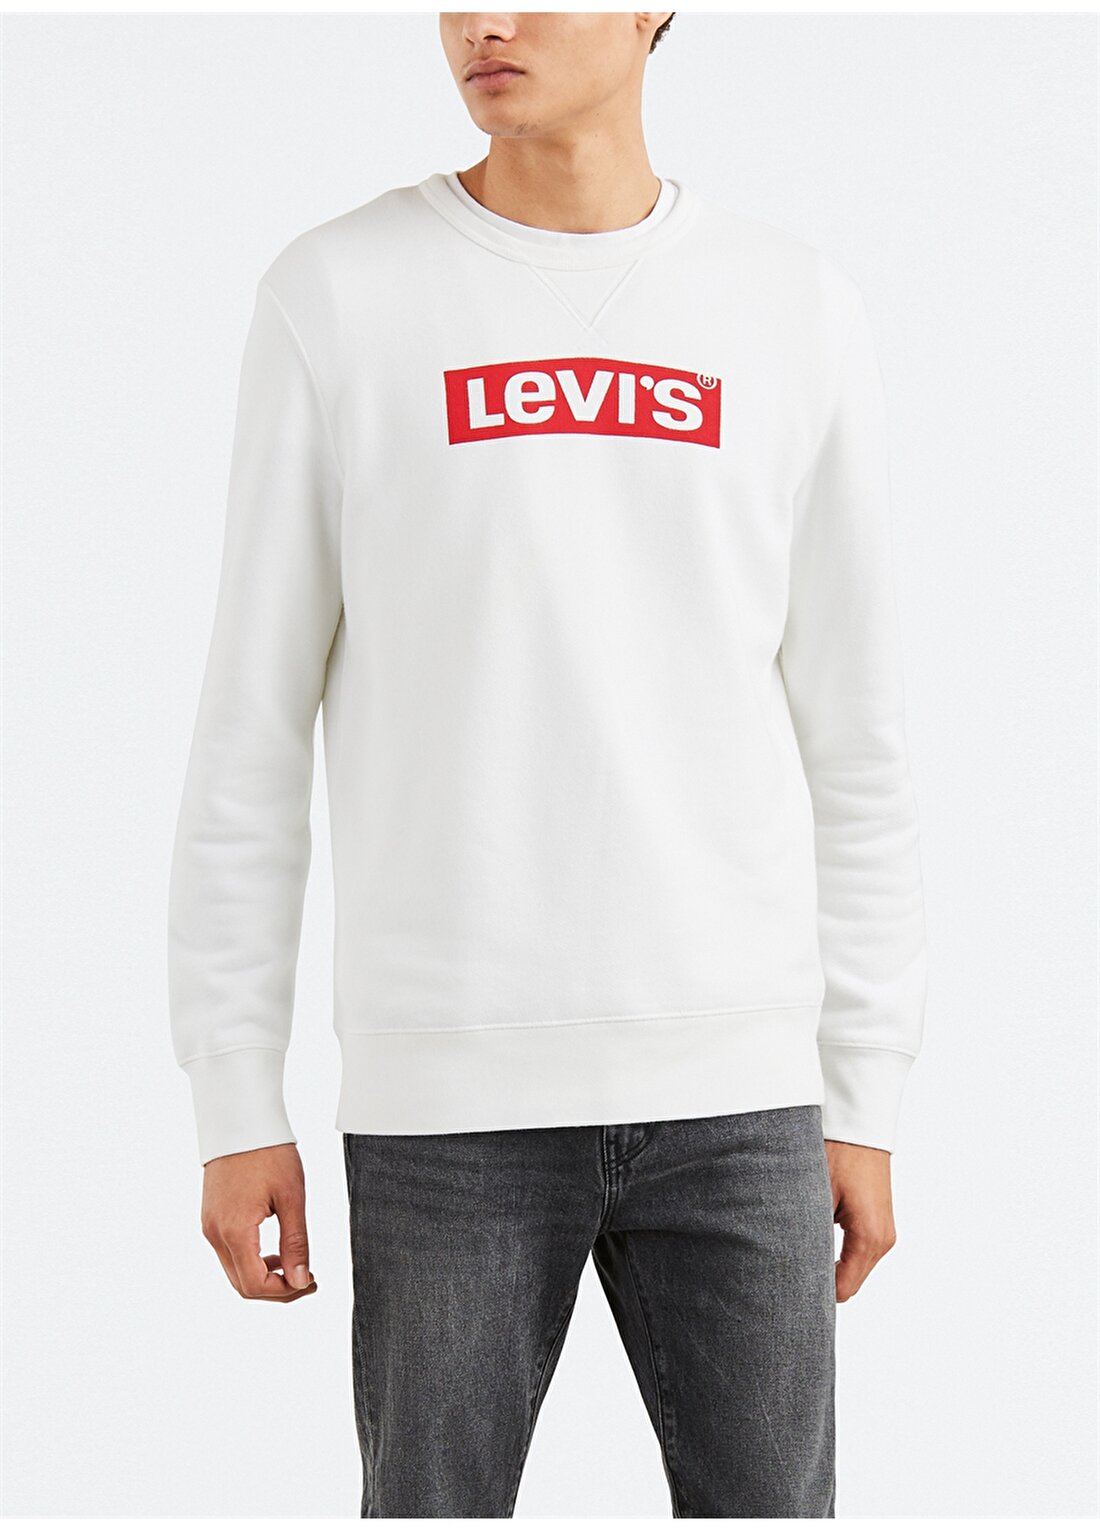 Levis Graphic Crew B Add Crew T2 Flock White Sweatshirt